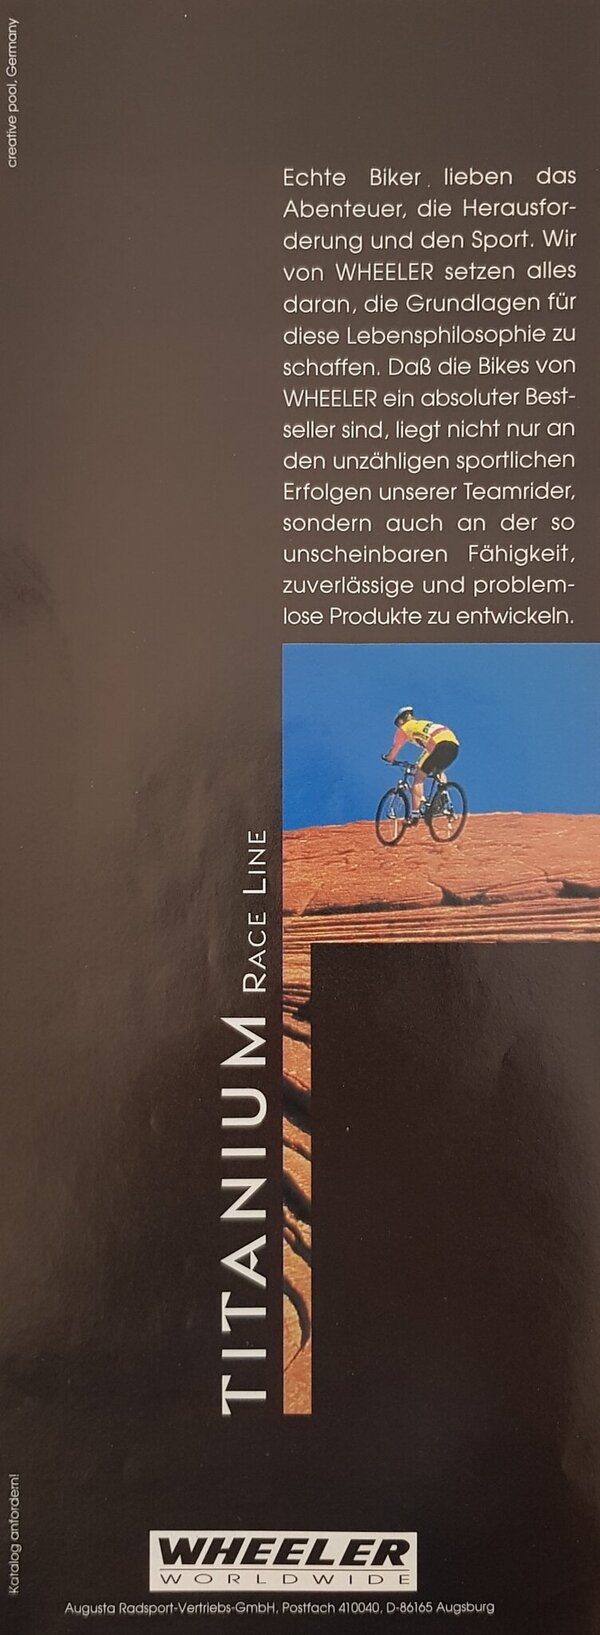 Wheeler Titanium Ad aus Bike 1994.jpg